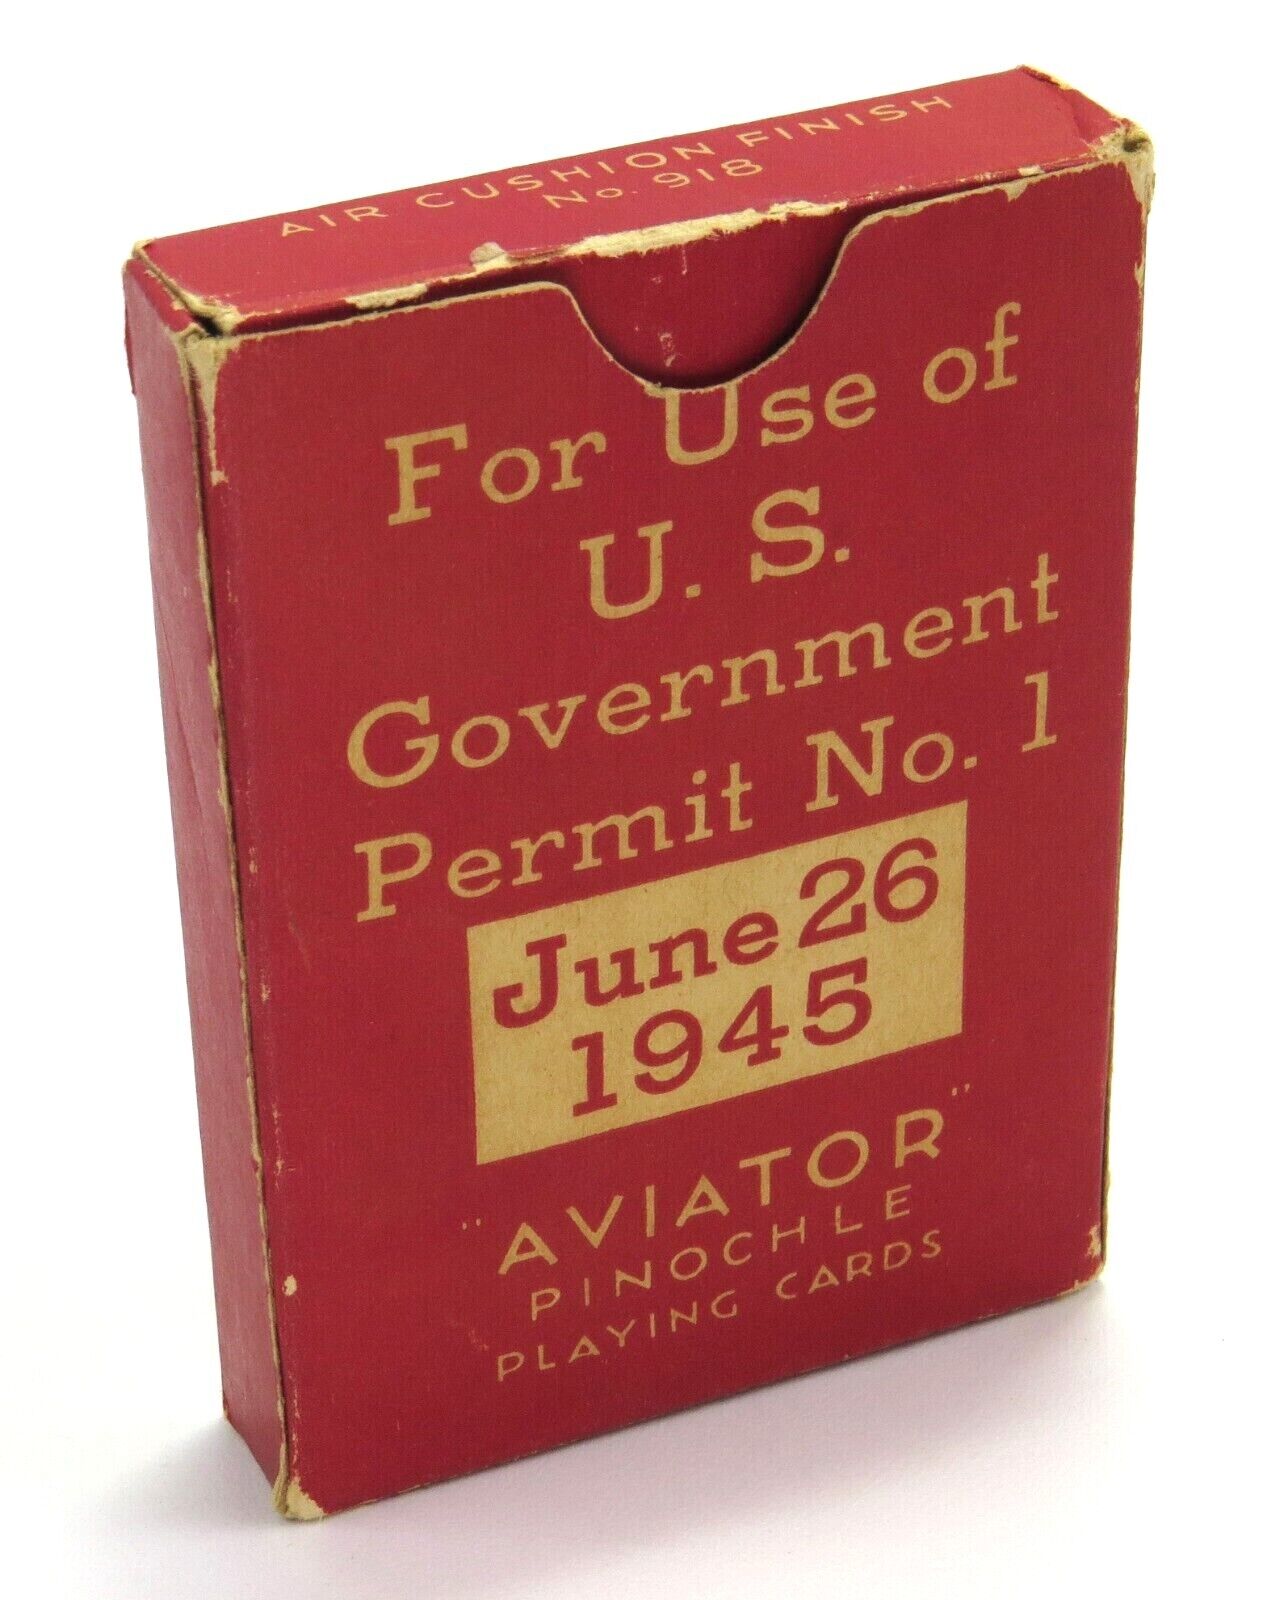 Vintage June 26 1945 Aviator Pinochle Cards, U.S. Government Permit No. 1, Read